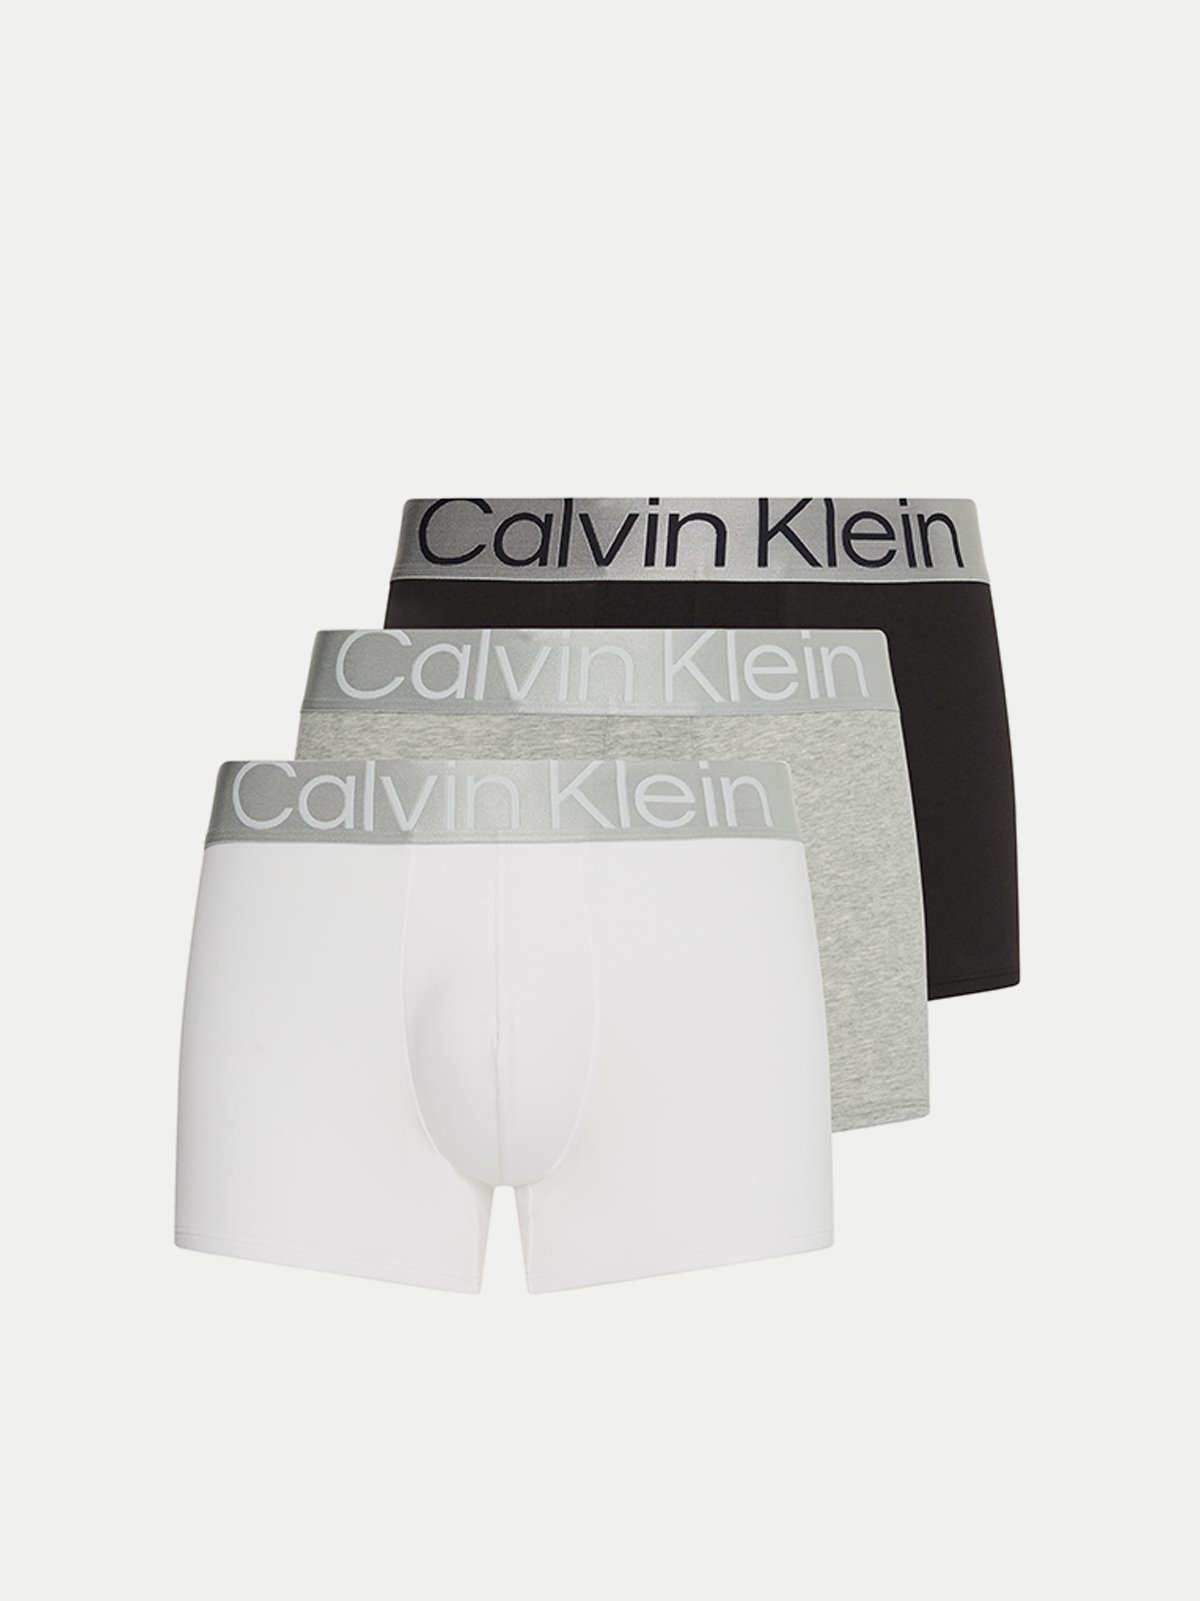 Charcoal Performance Tuxedo by Calvin Klein